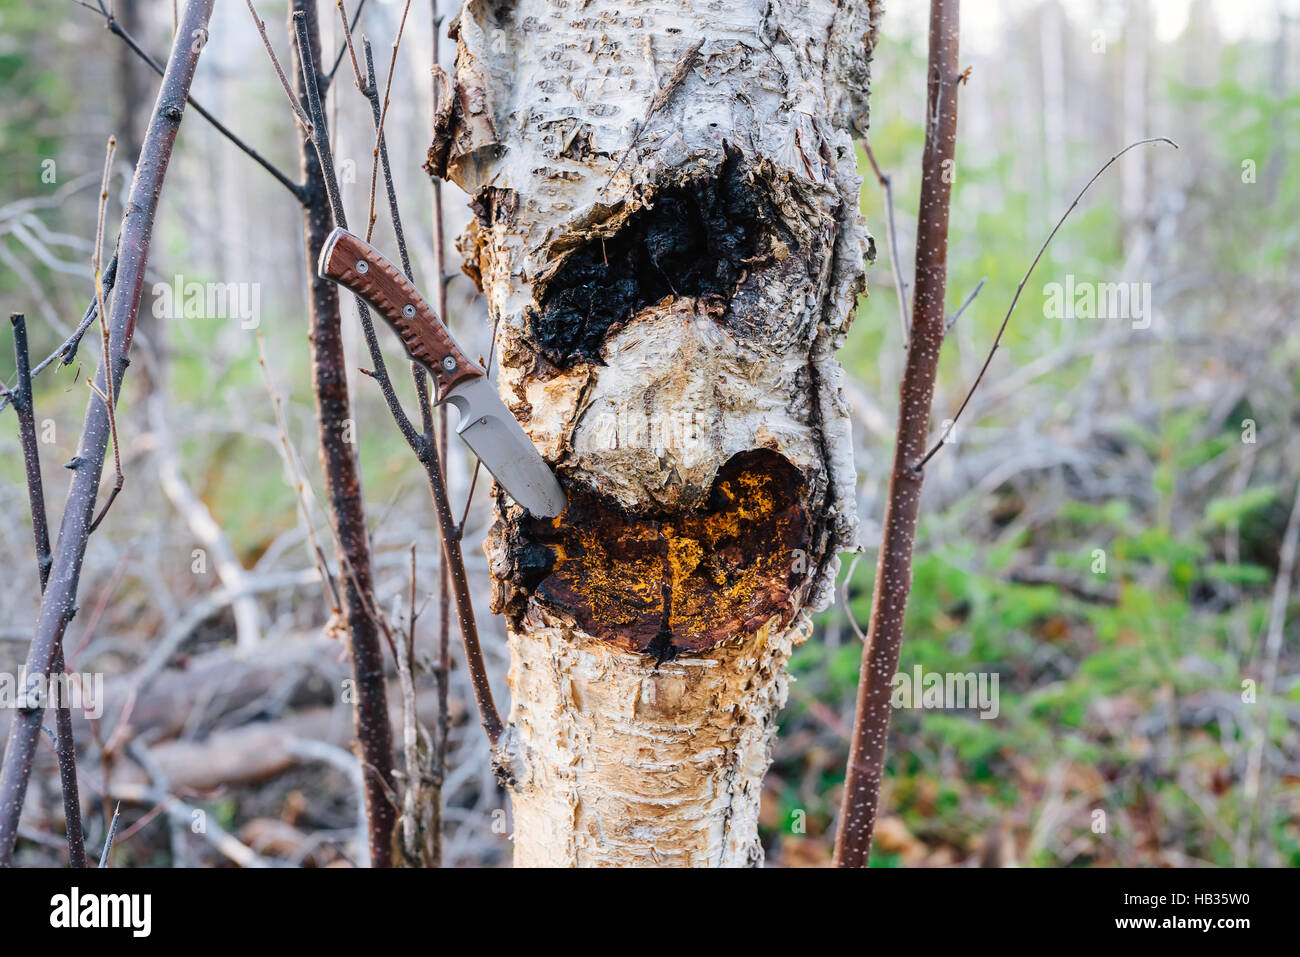 Harvesting a chaga mushroom (Inonotus obliquus) from a paper birch tree in British Columbia, Canada Stock Photo